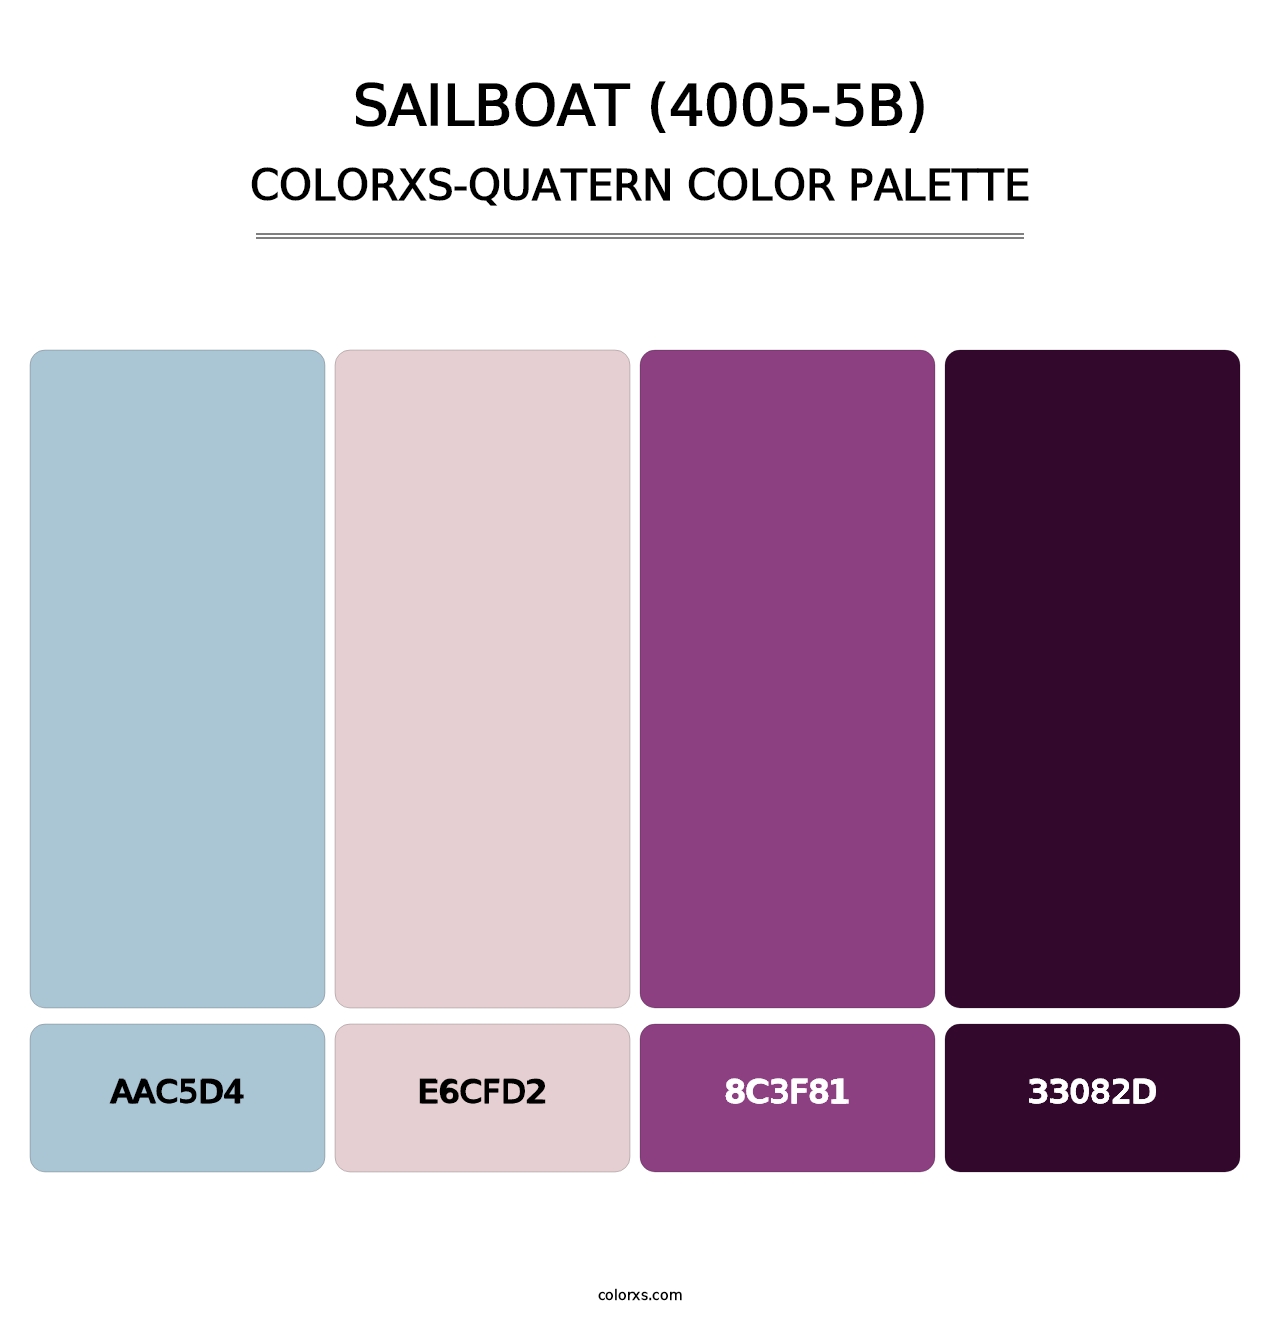 Sailboat (4005-5B) - Colorxs Quatern Palette